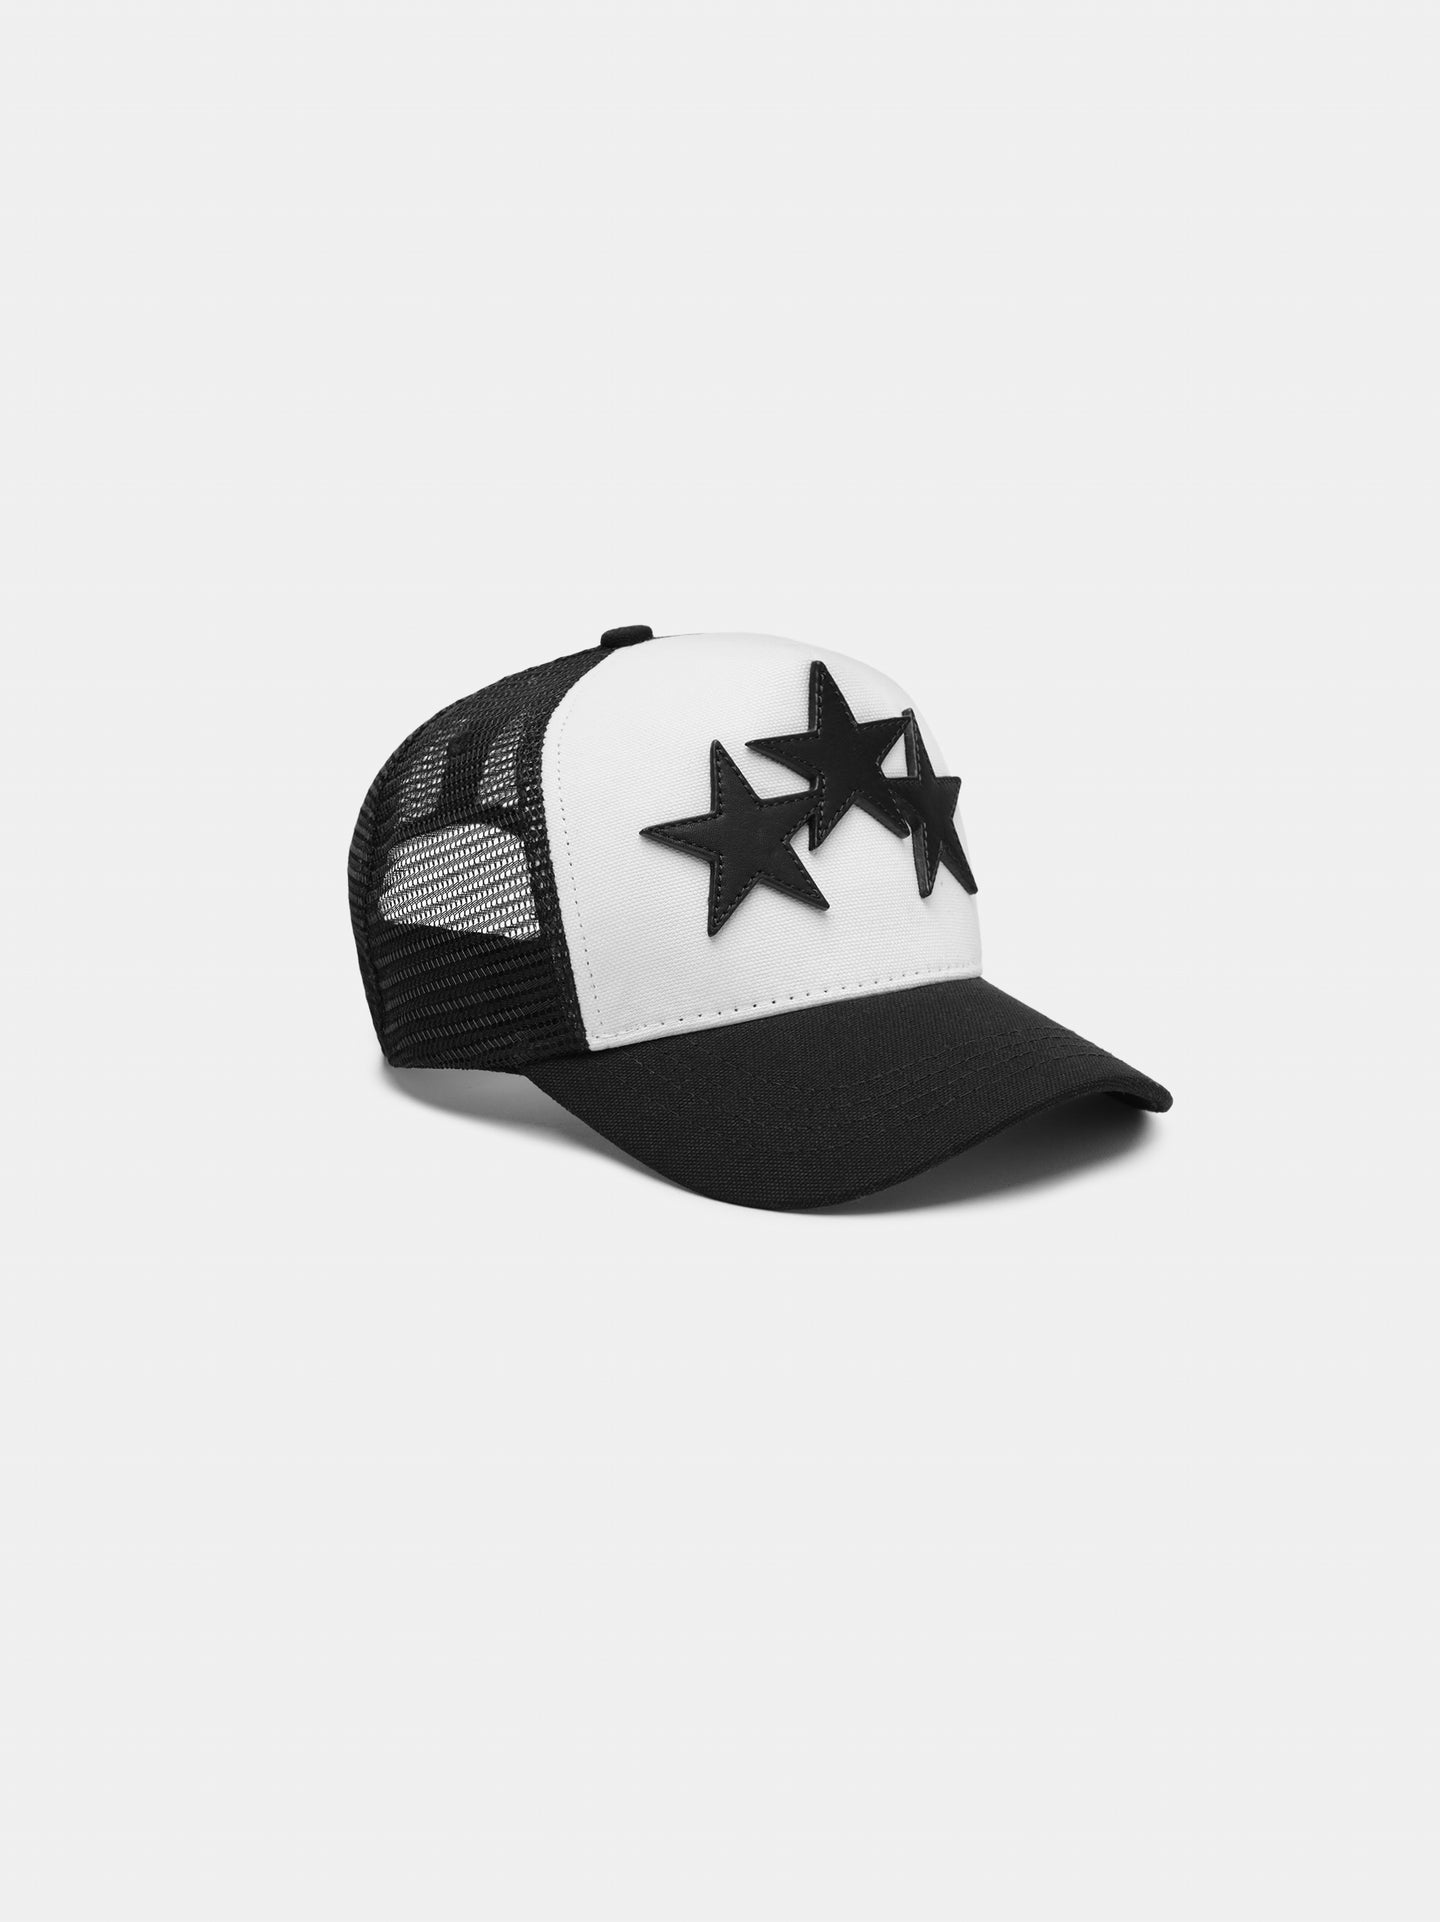 KIDS - KIDS' 3 STAR TRUCKER HAT - Black